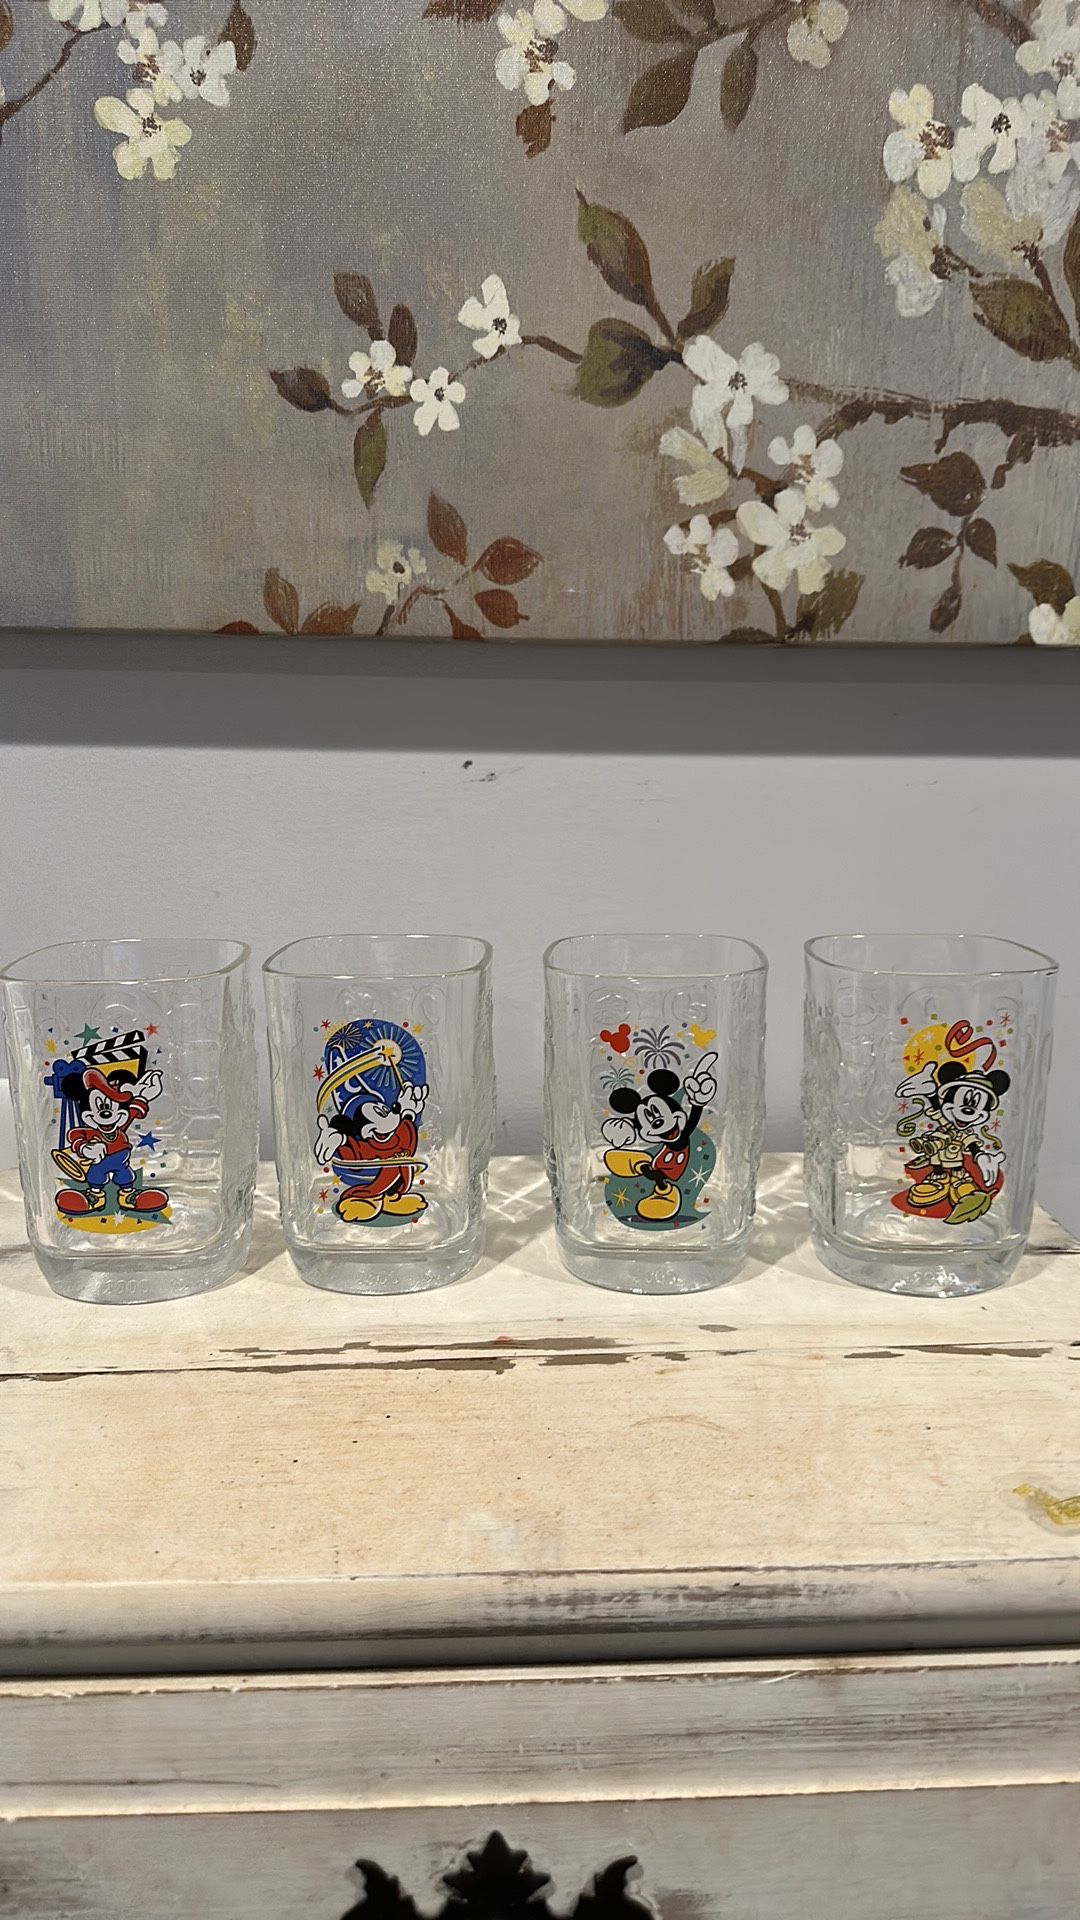 McDonald’s Disney Glasses Set Of 4